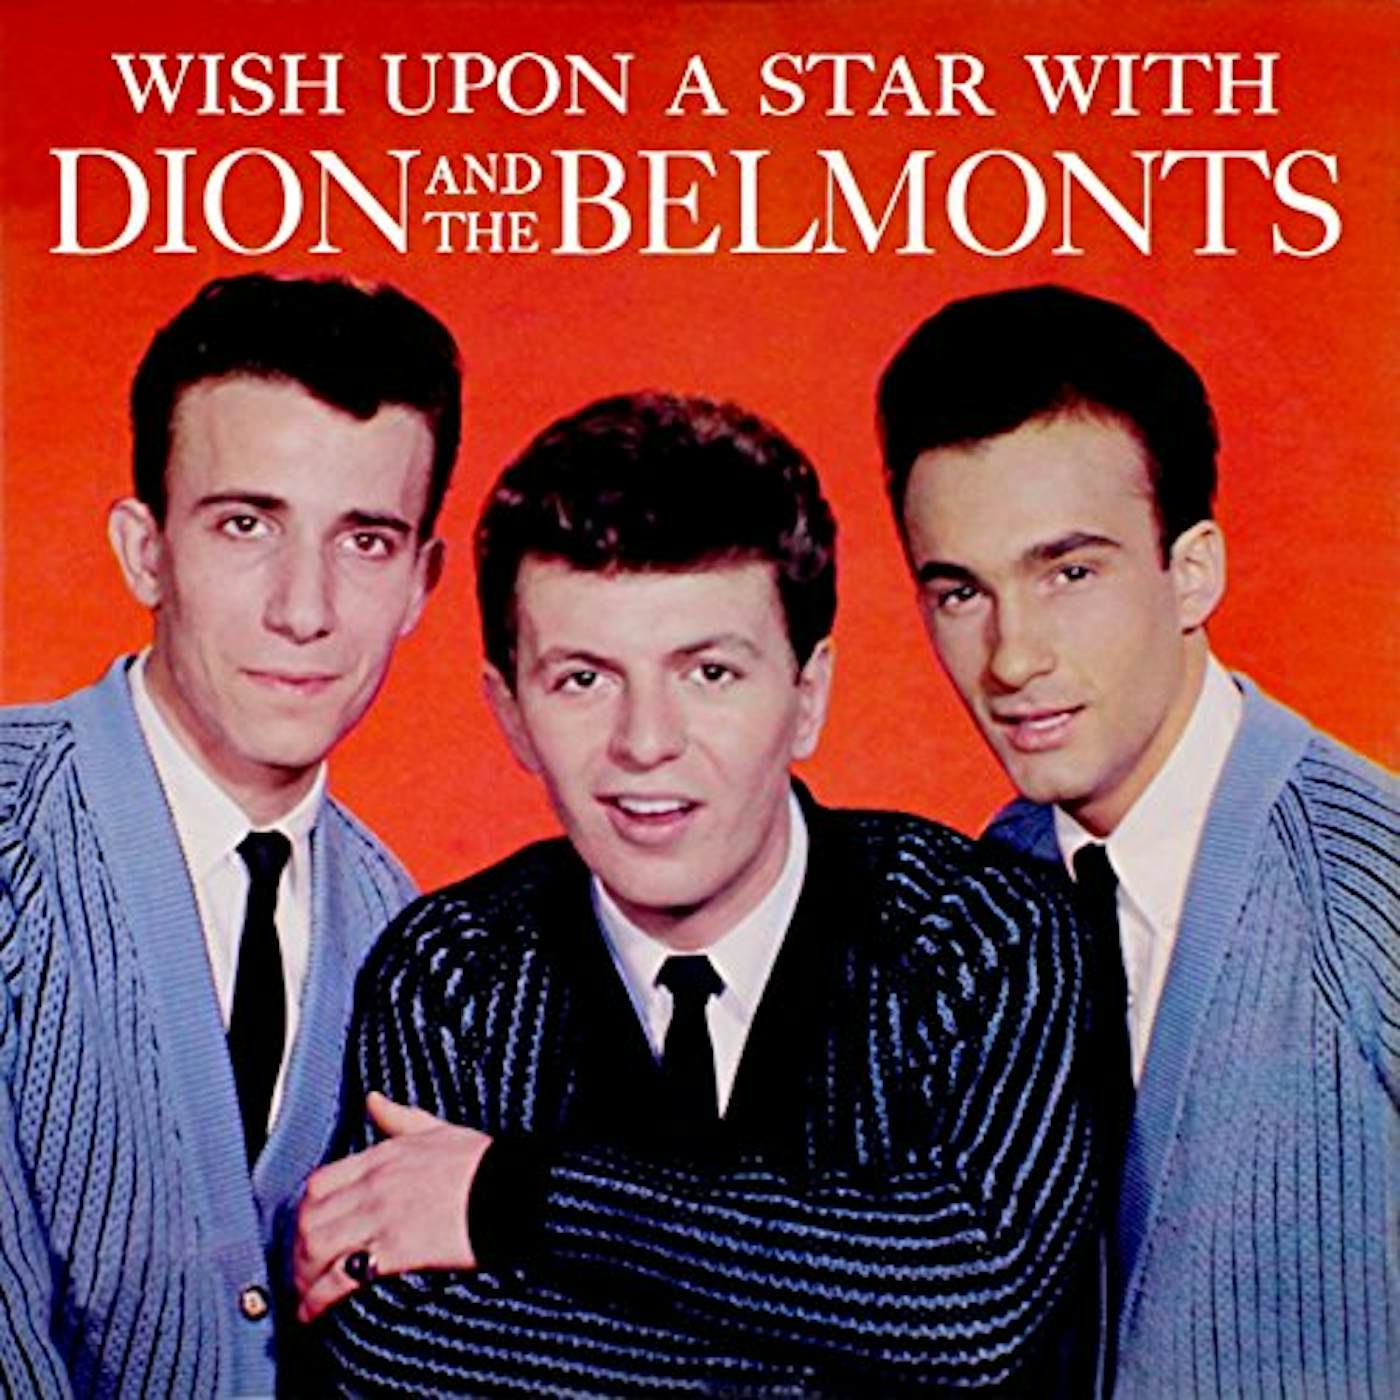 Dion & The Belmonts WISH UPON A STAR (BONUS TRACKS) Vinyl Record - 180 Gram Pressing, Remastered, Virgin Vinyl